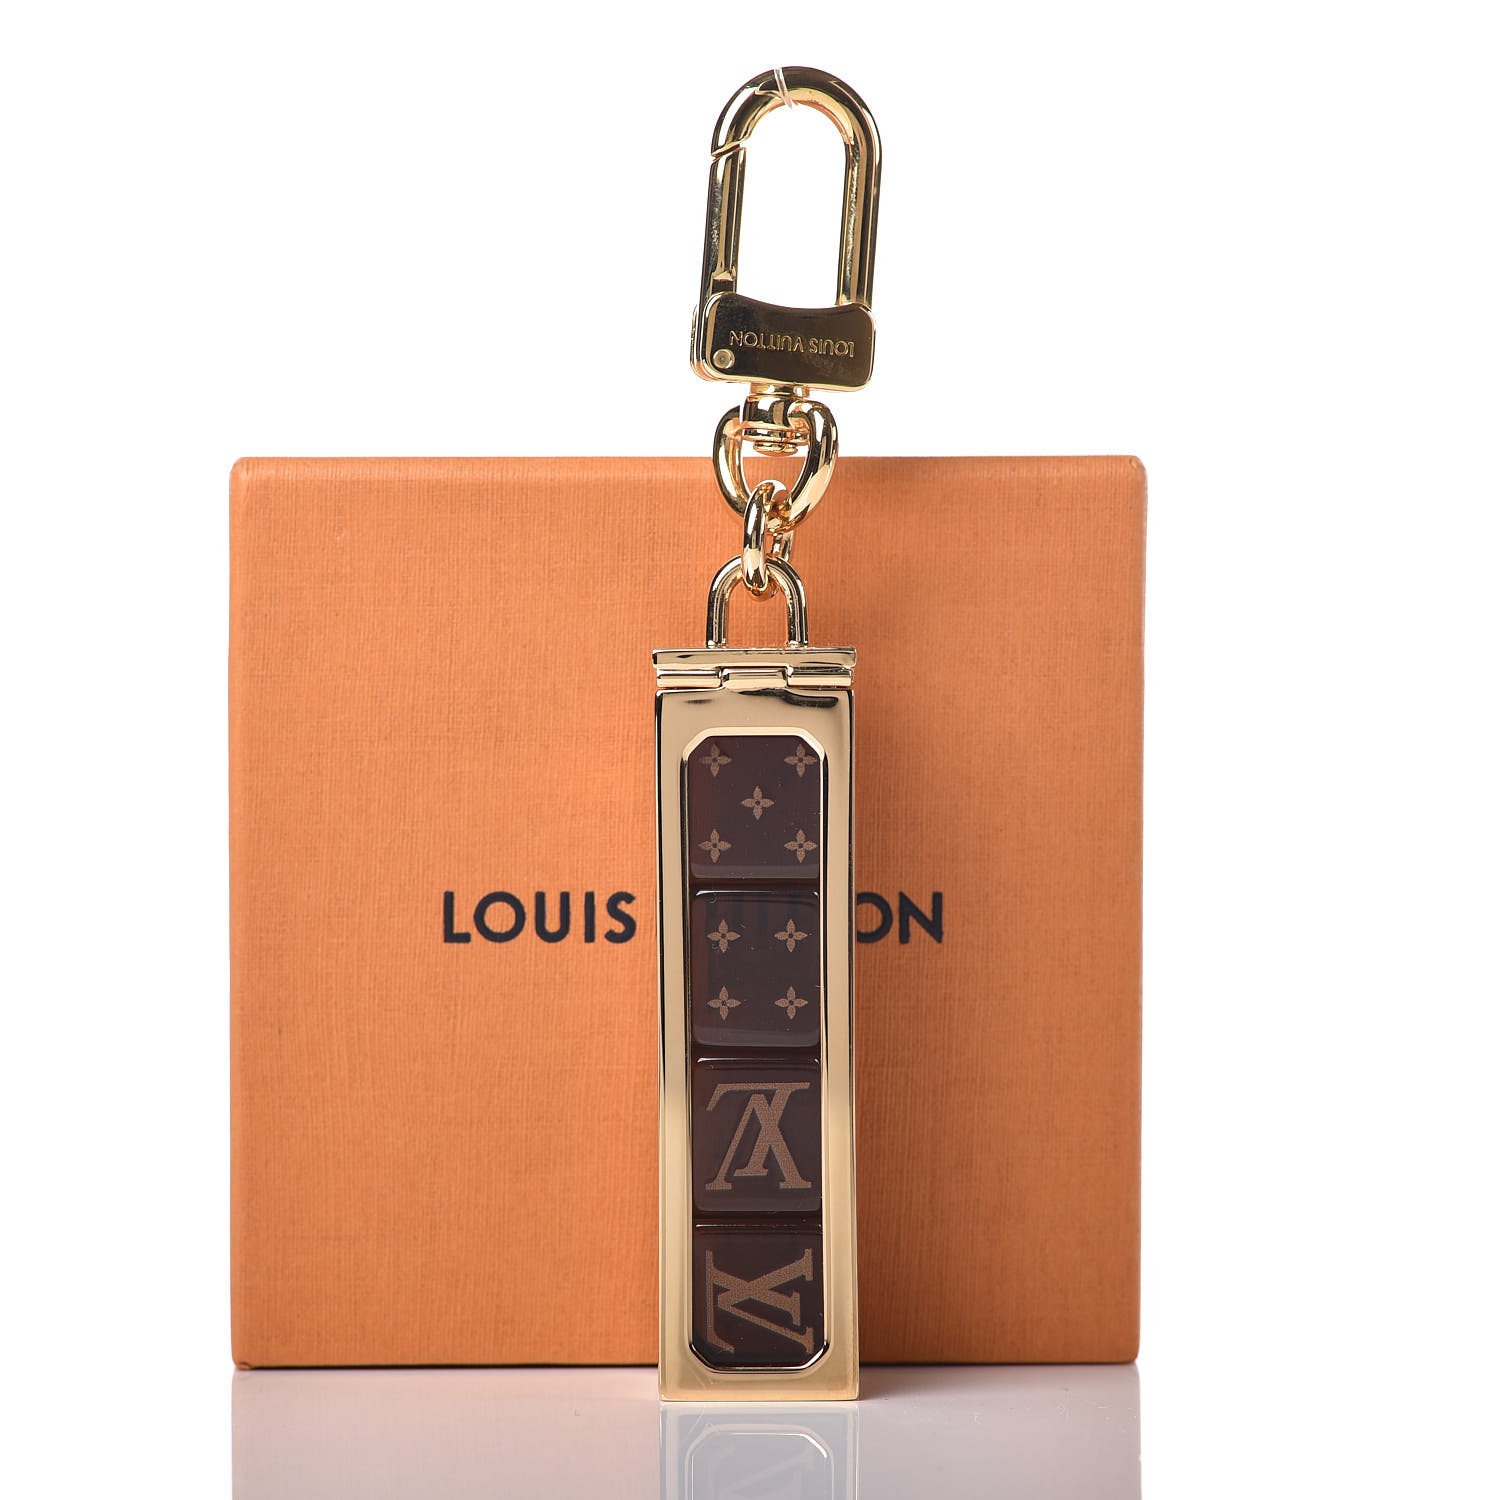 LOUIS VUITTON X Supreme Dice Key Chain Bag Charm Brown 321894